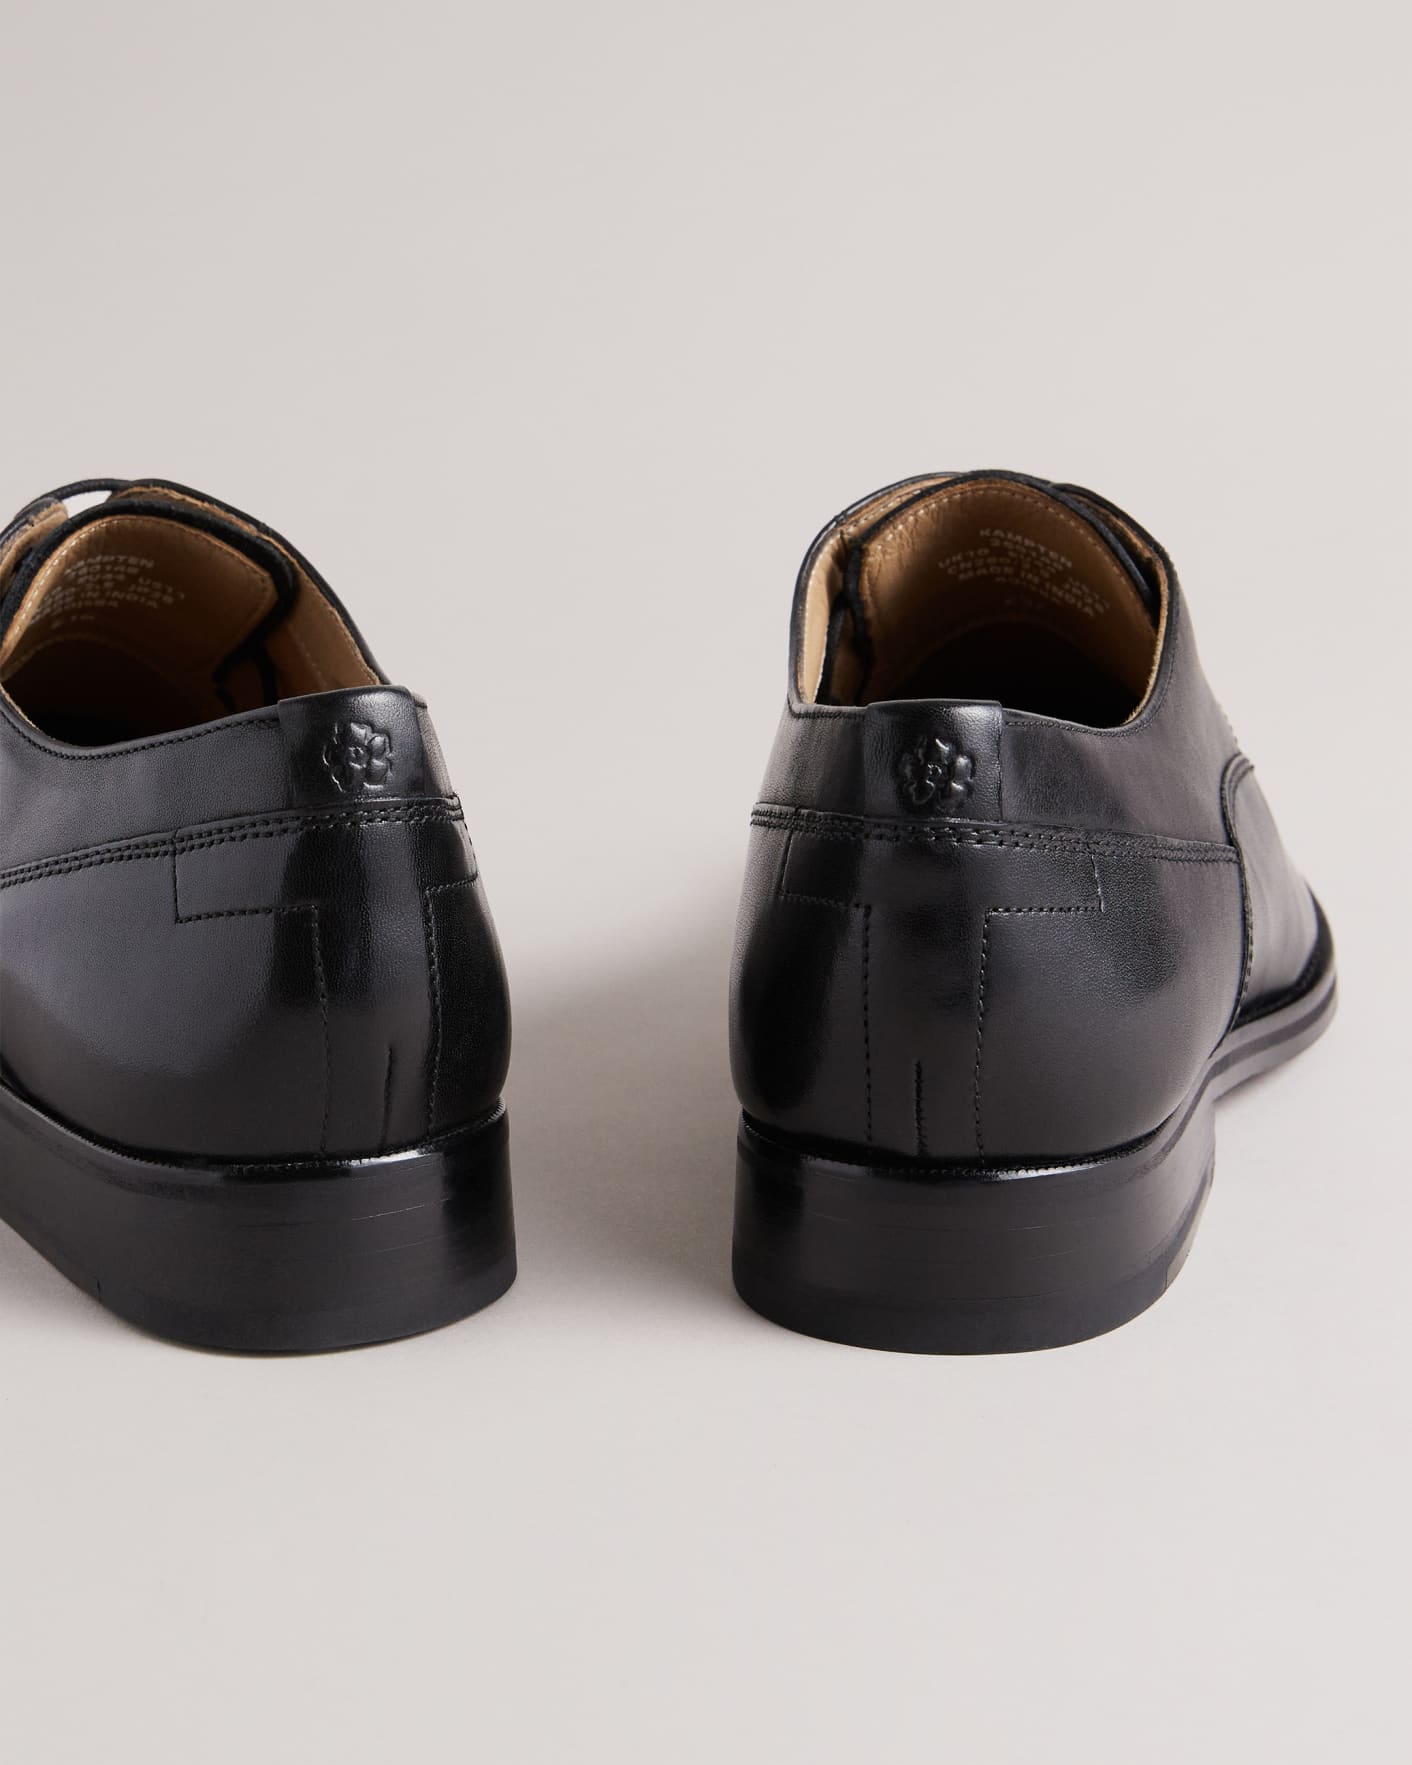 Kampten Shoes in Black